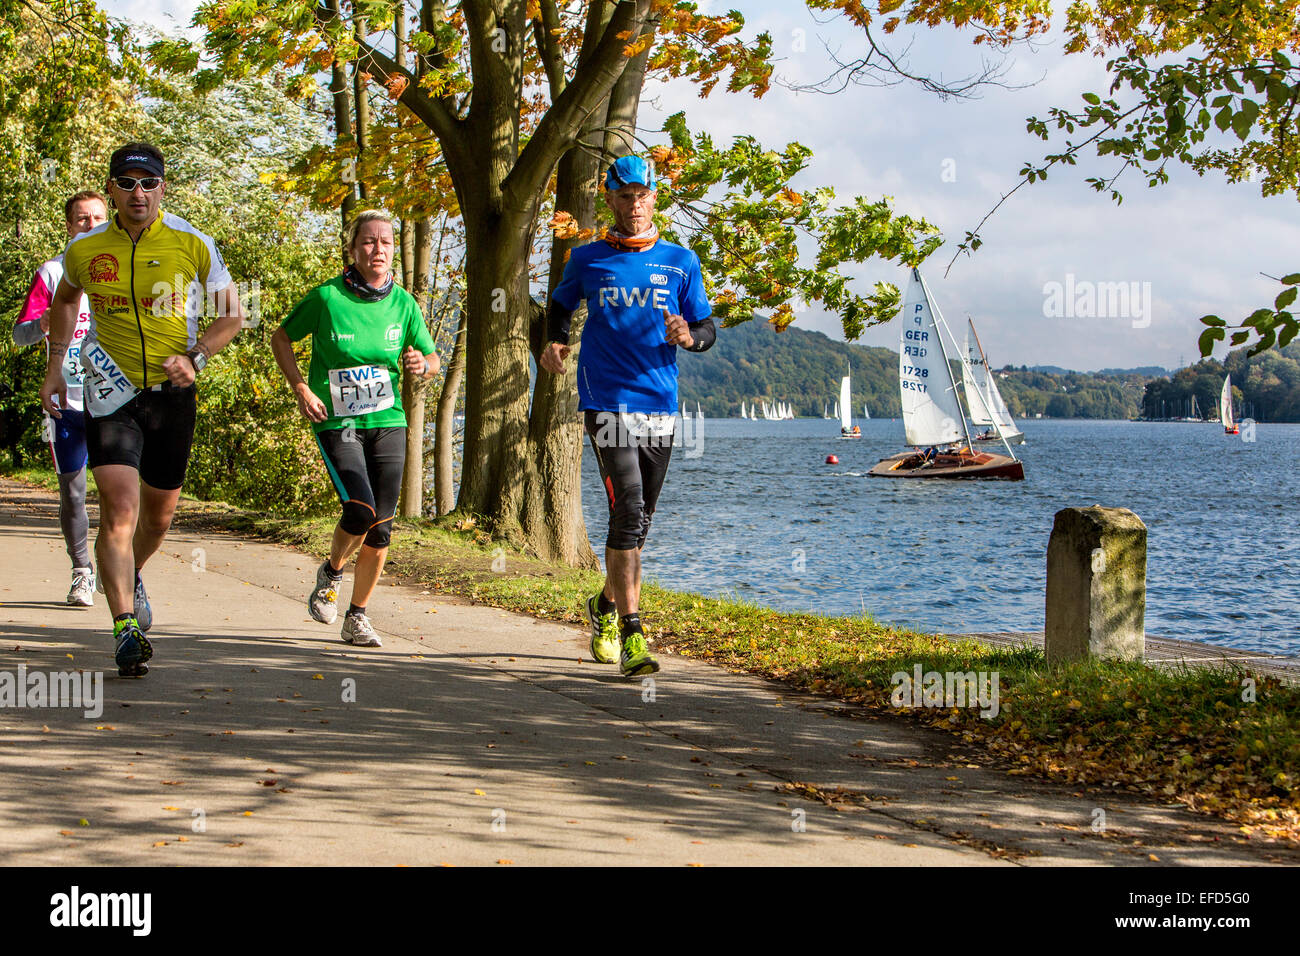 Marathon around the "Baldeneysee" lake, Essen, Germany Stock Photo